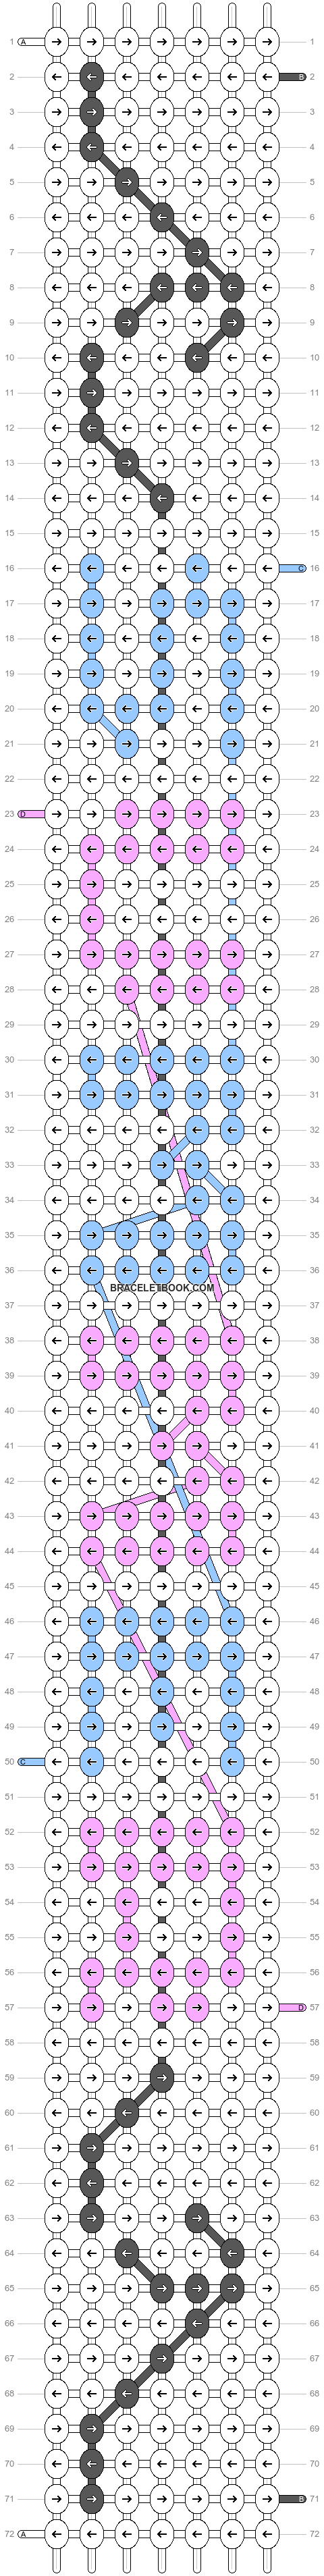 Alpha pattern #51088 variation #84755 pattern